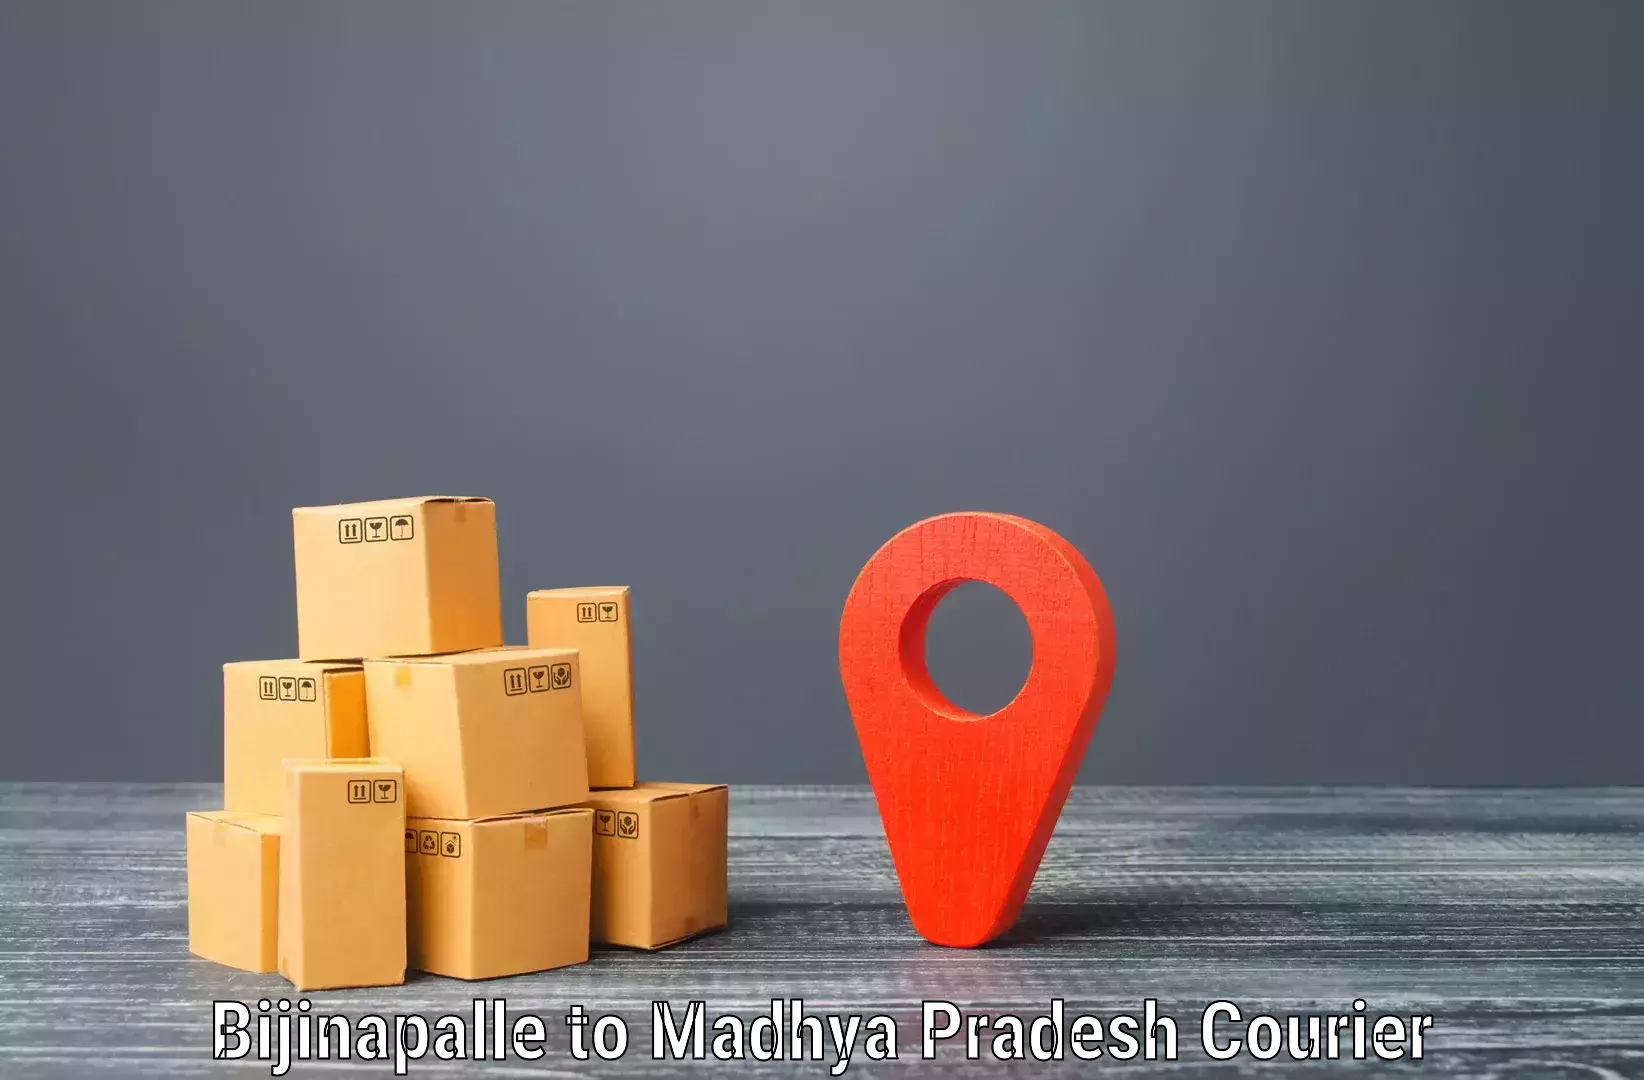 Tech-enabled shipping in Bijinapalle to Binaganj